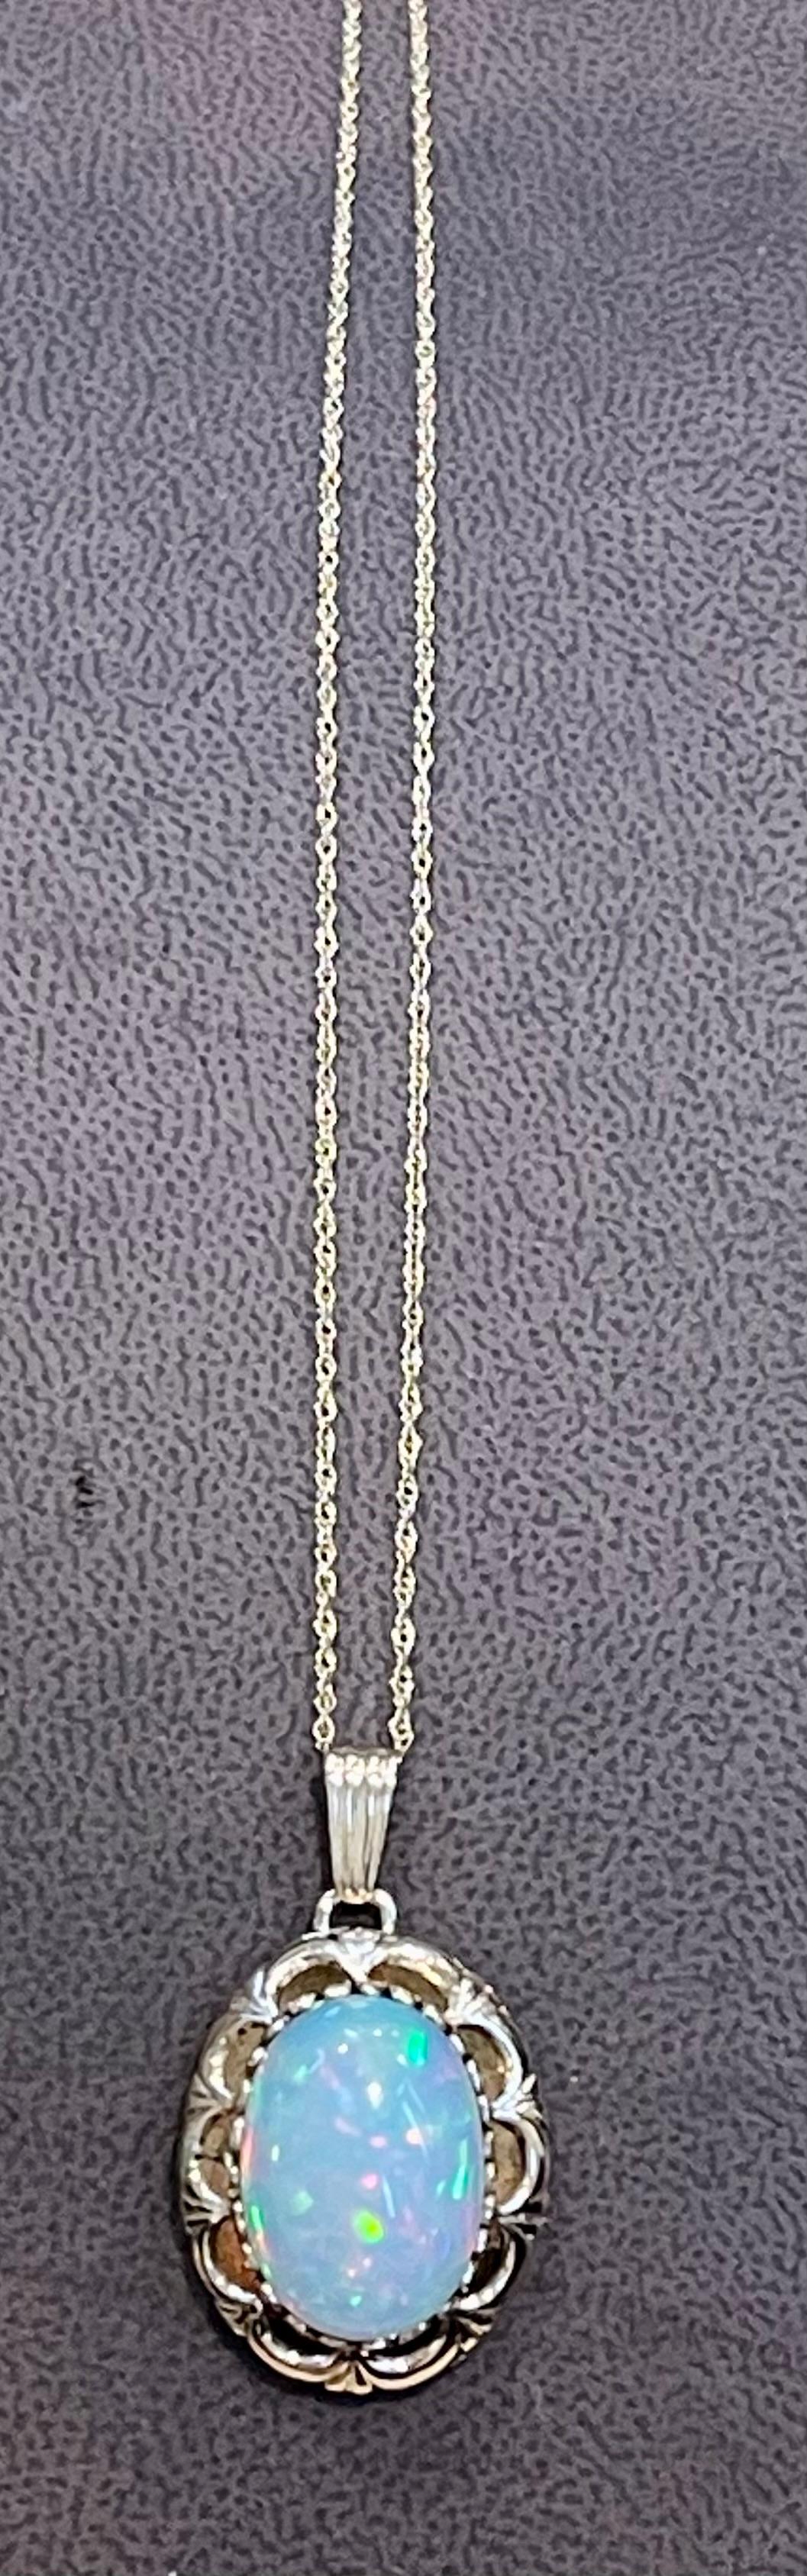 8 Carat Oval Ethiopian Opal Pendant / Necklace 14 Karat Yellow Gold Necklace 5